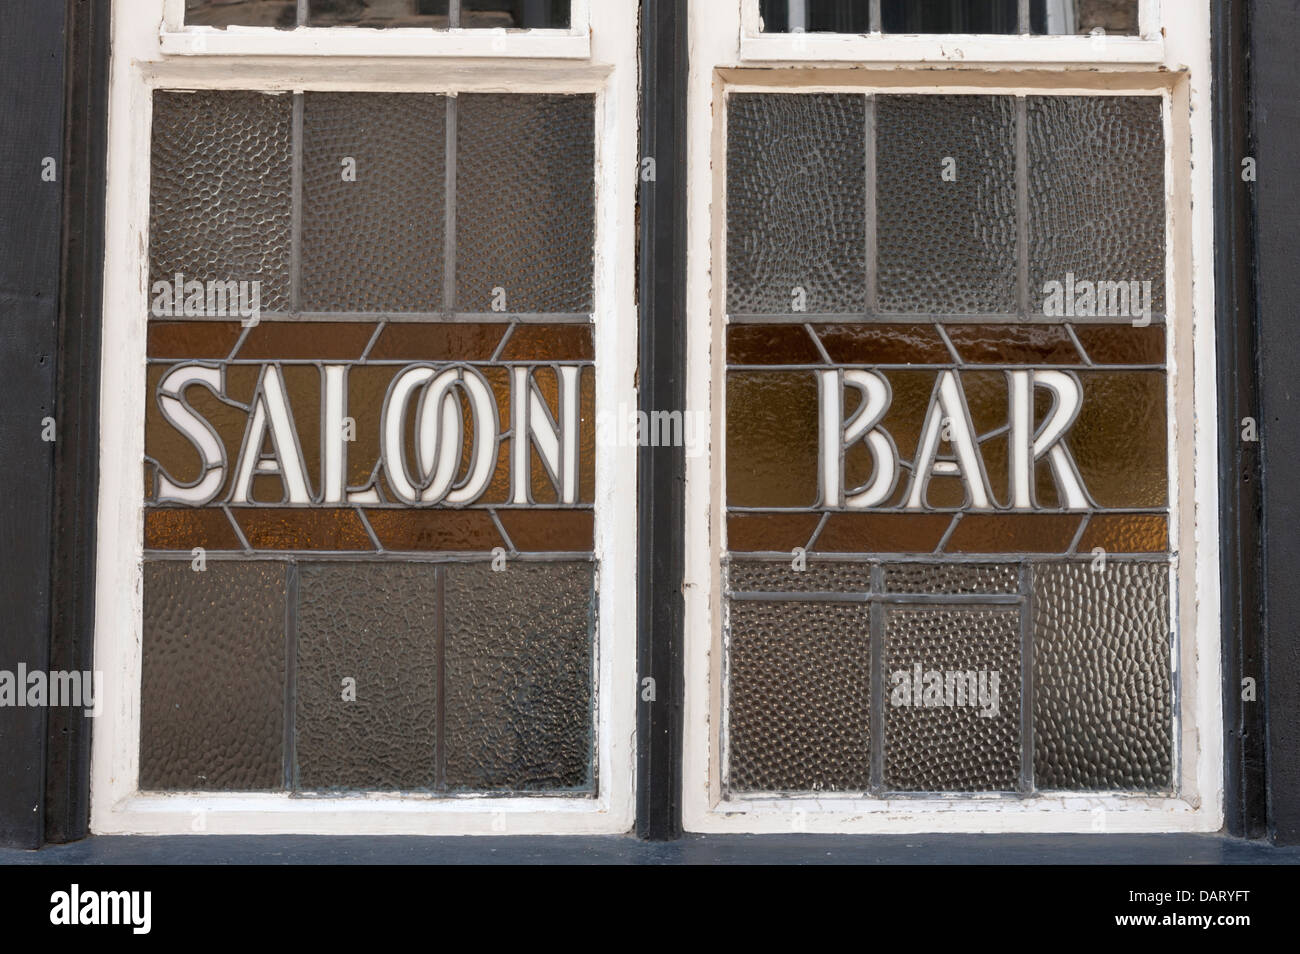 Salon bar sign on an old pub window Stock Photo